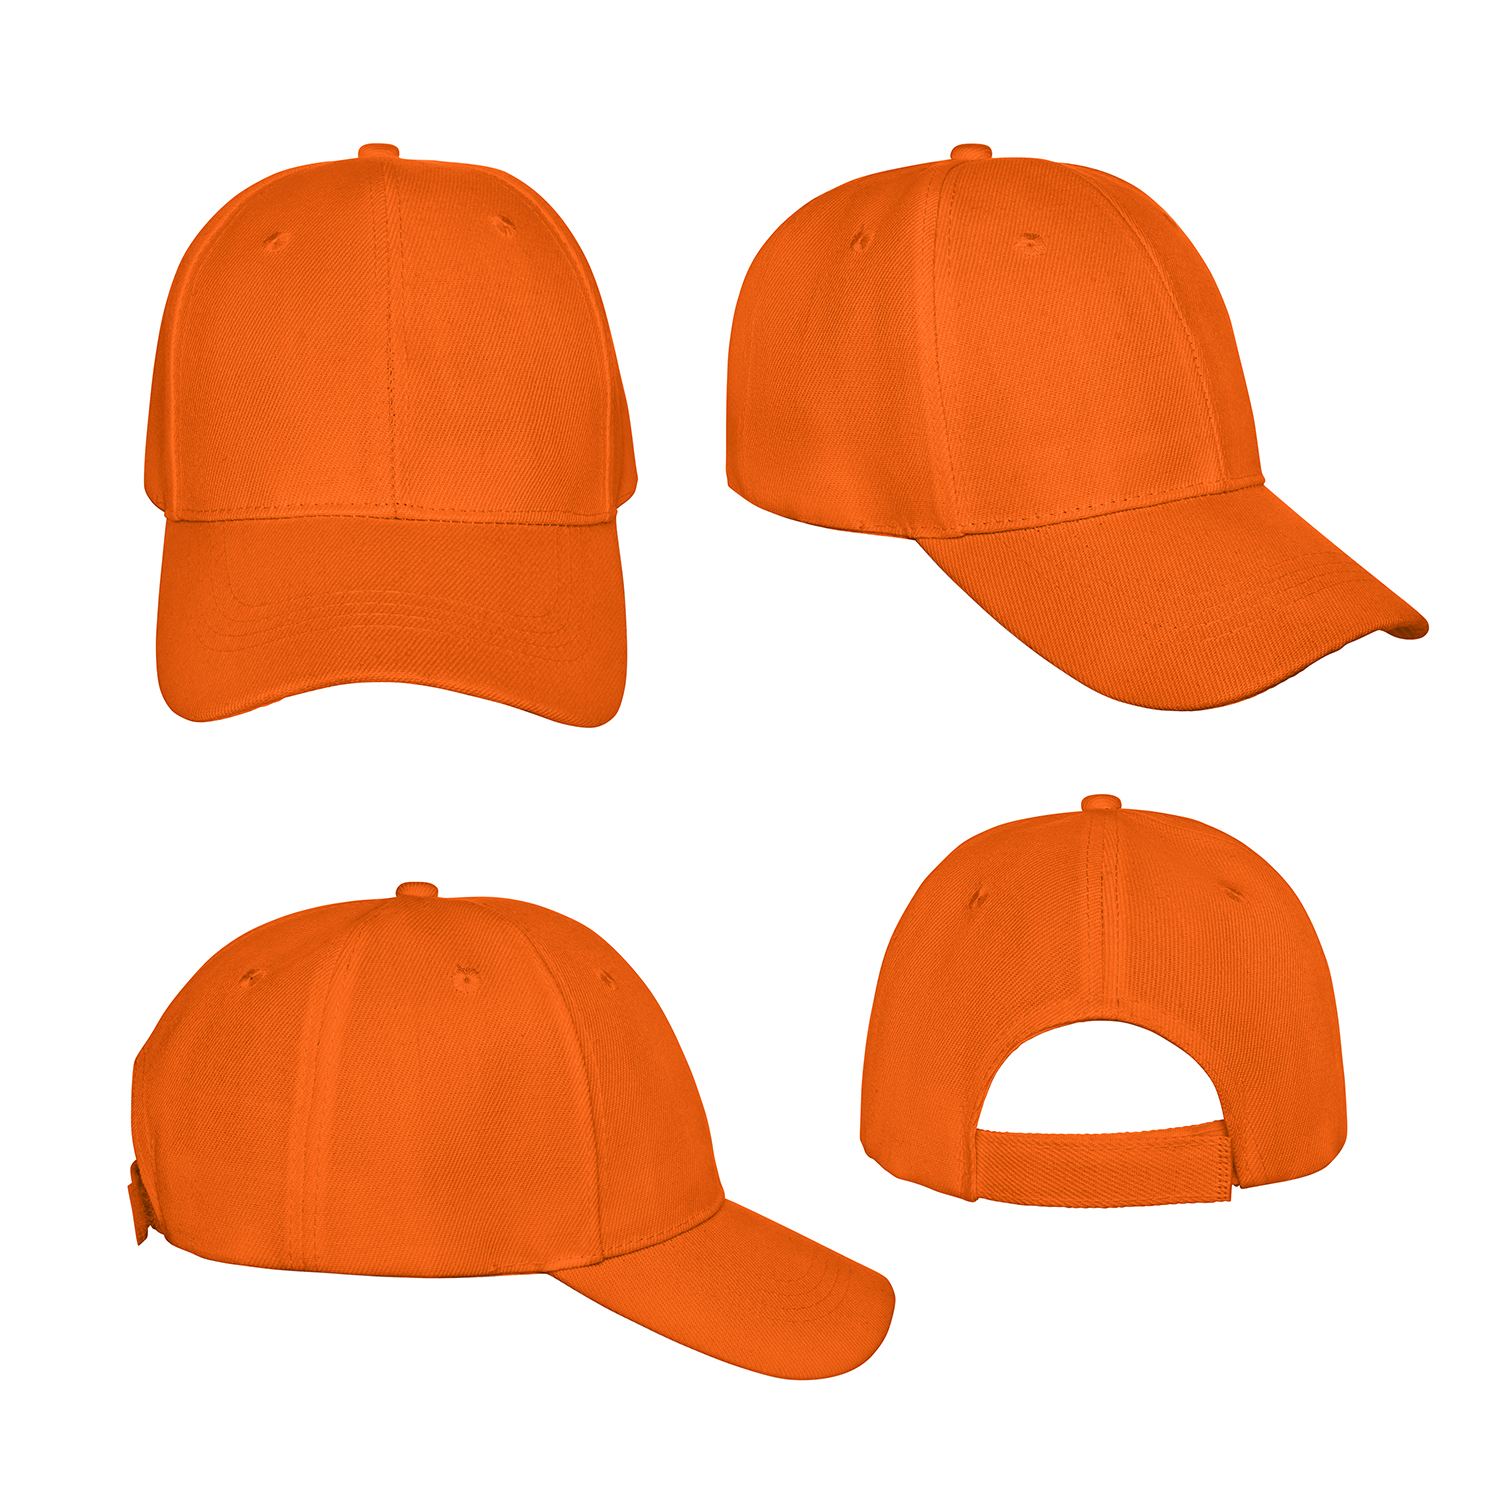 Pack of 15 Bulk Wholesale Plain Baseball Cap Hat Adjustable (Orange) - image 4 of 4